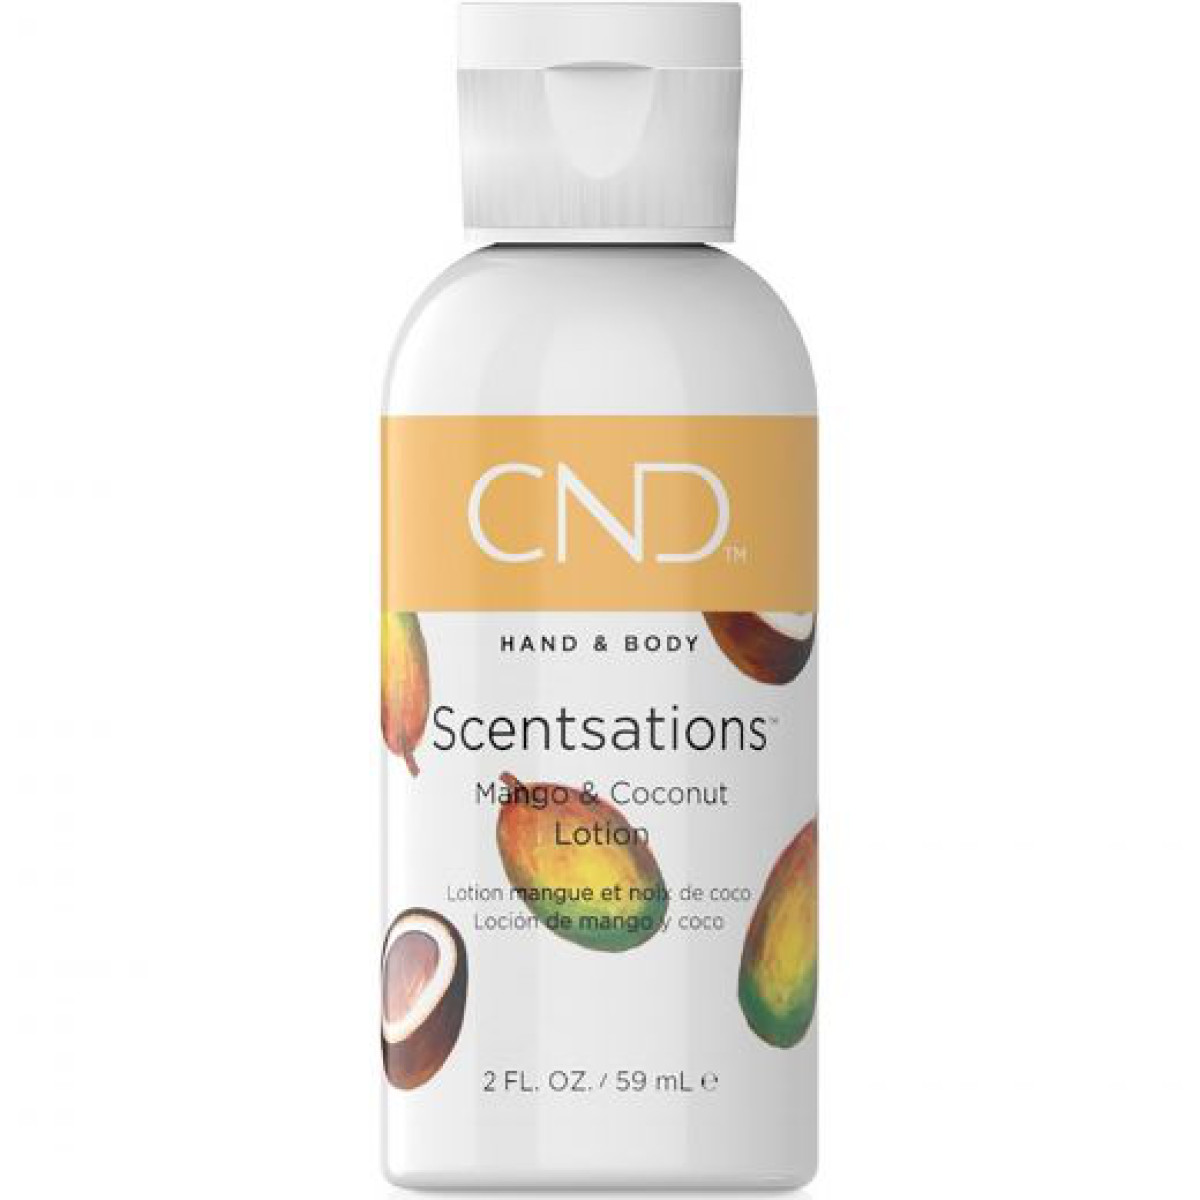 cn14227_cnd-scentsations-mango-coconut-lotion-59-ml